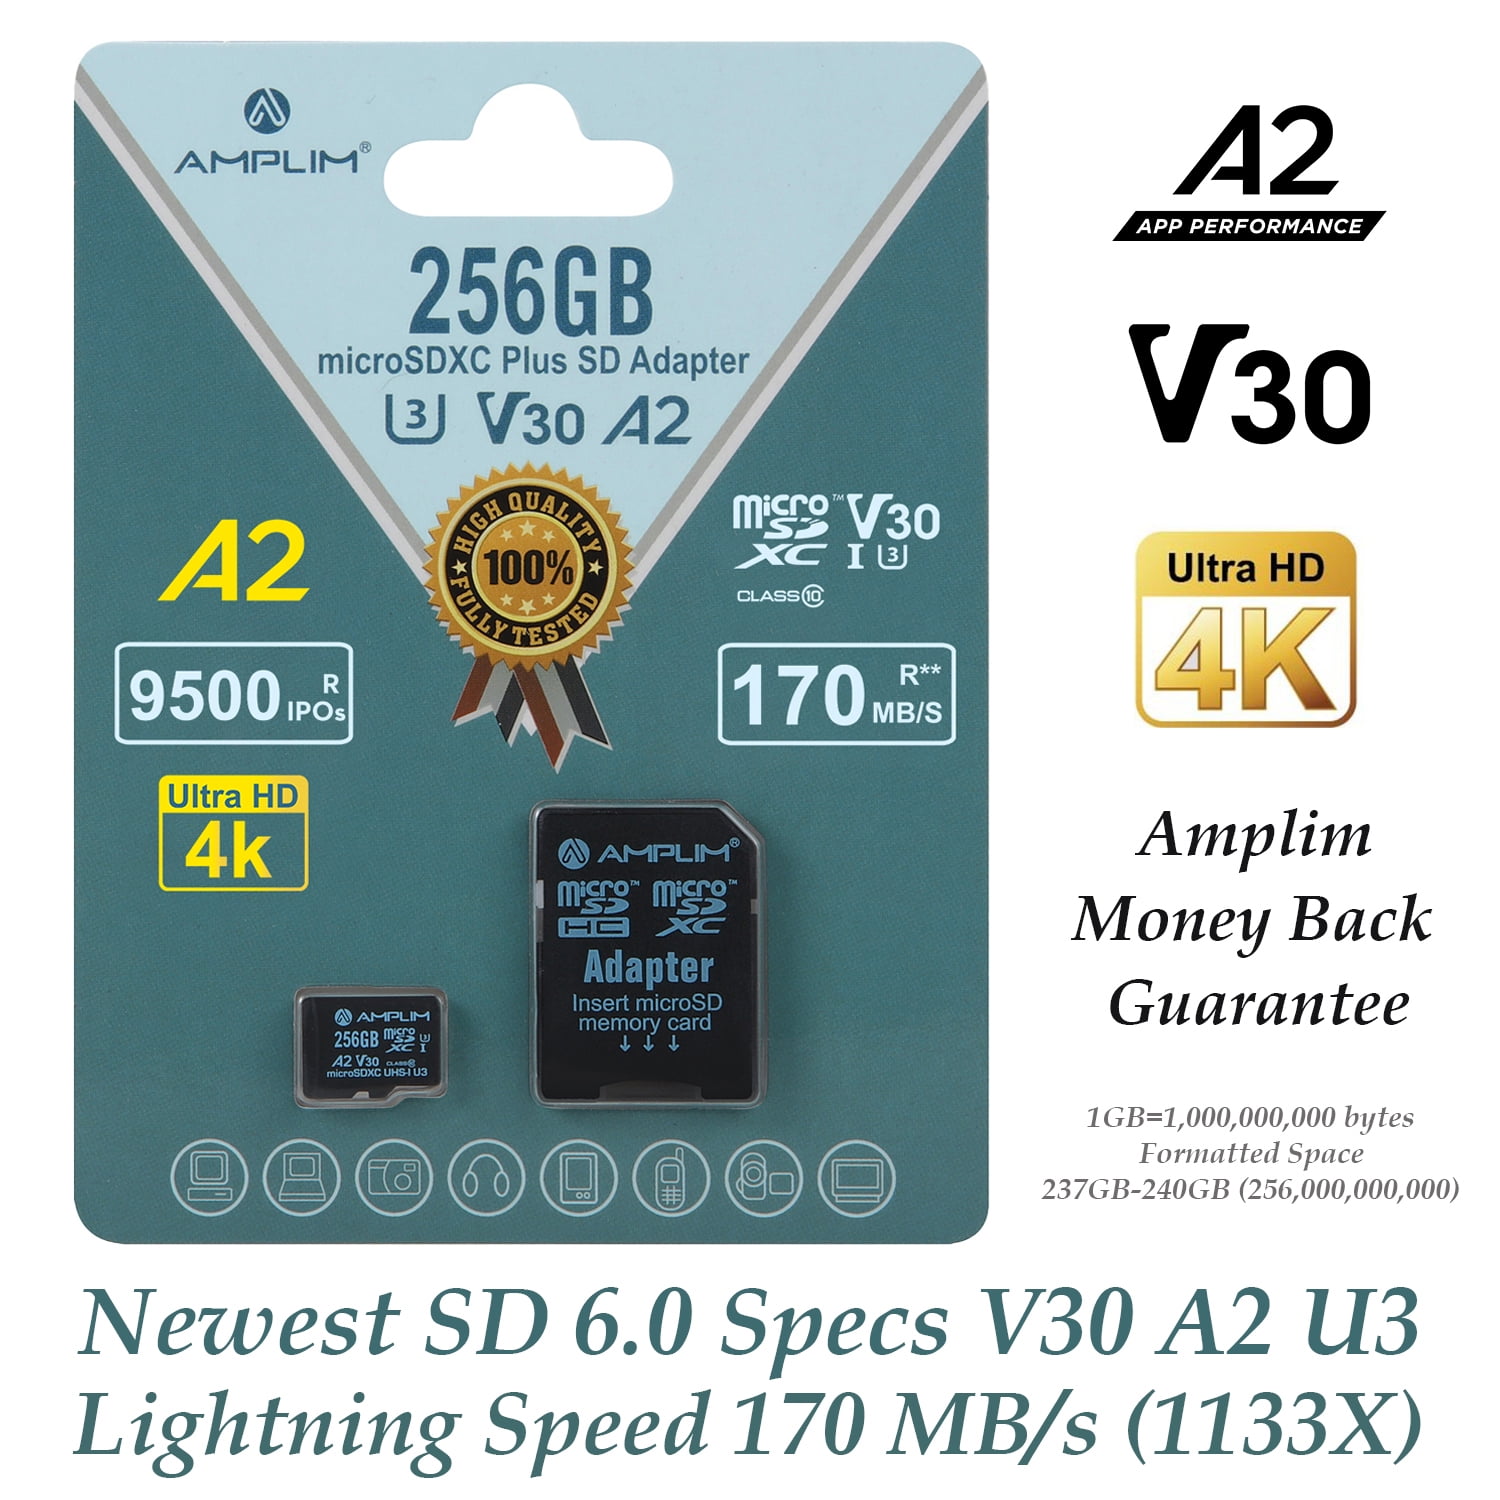 Samsung EVO Plus 256GB microSDXC UHS-I Memory Card with Adapter  MB-MC256KA/AM - Best Buy